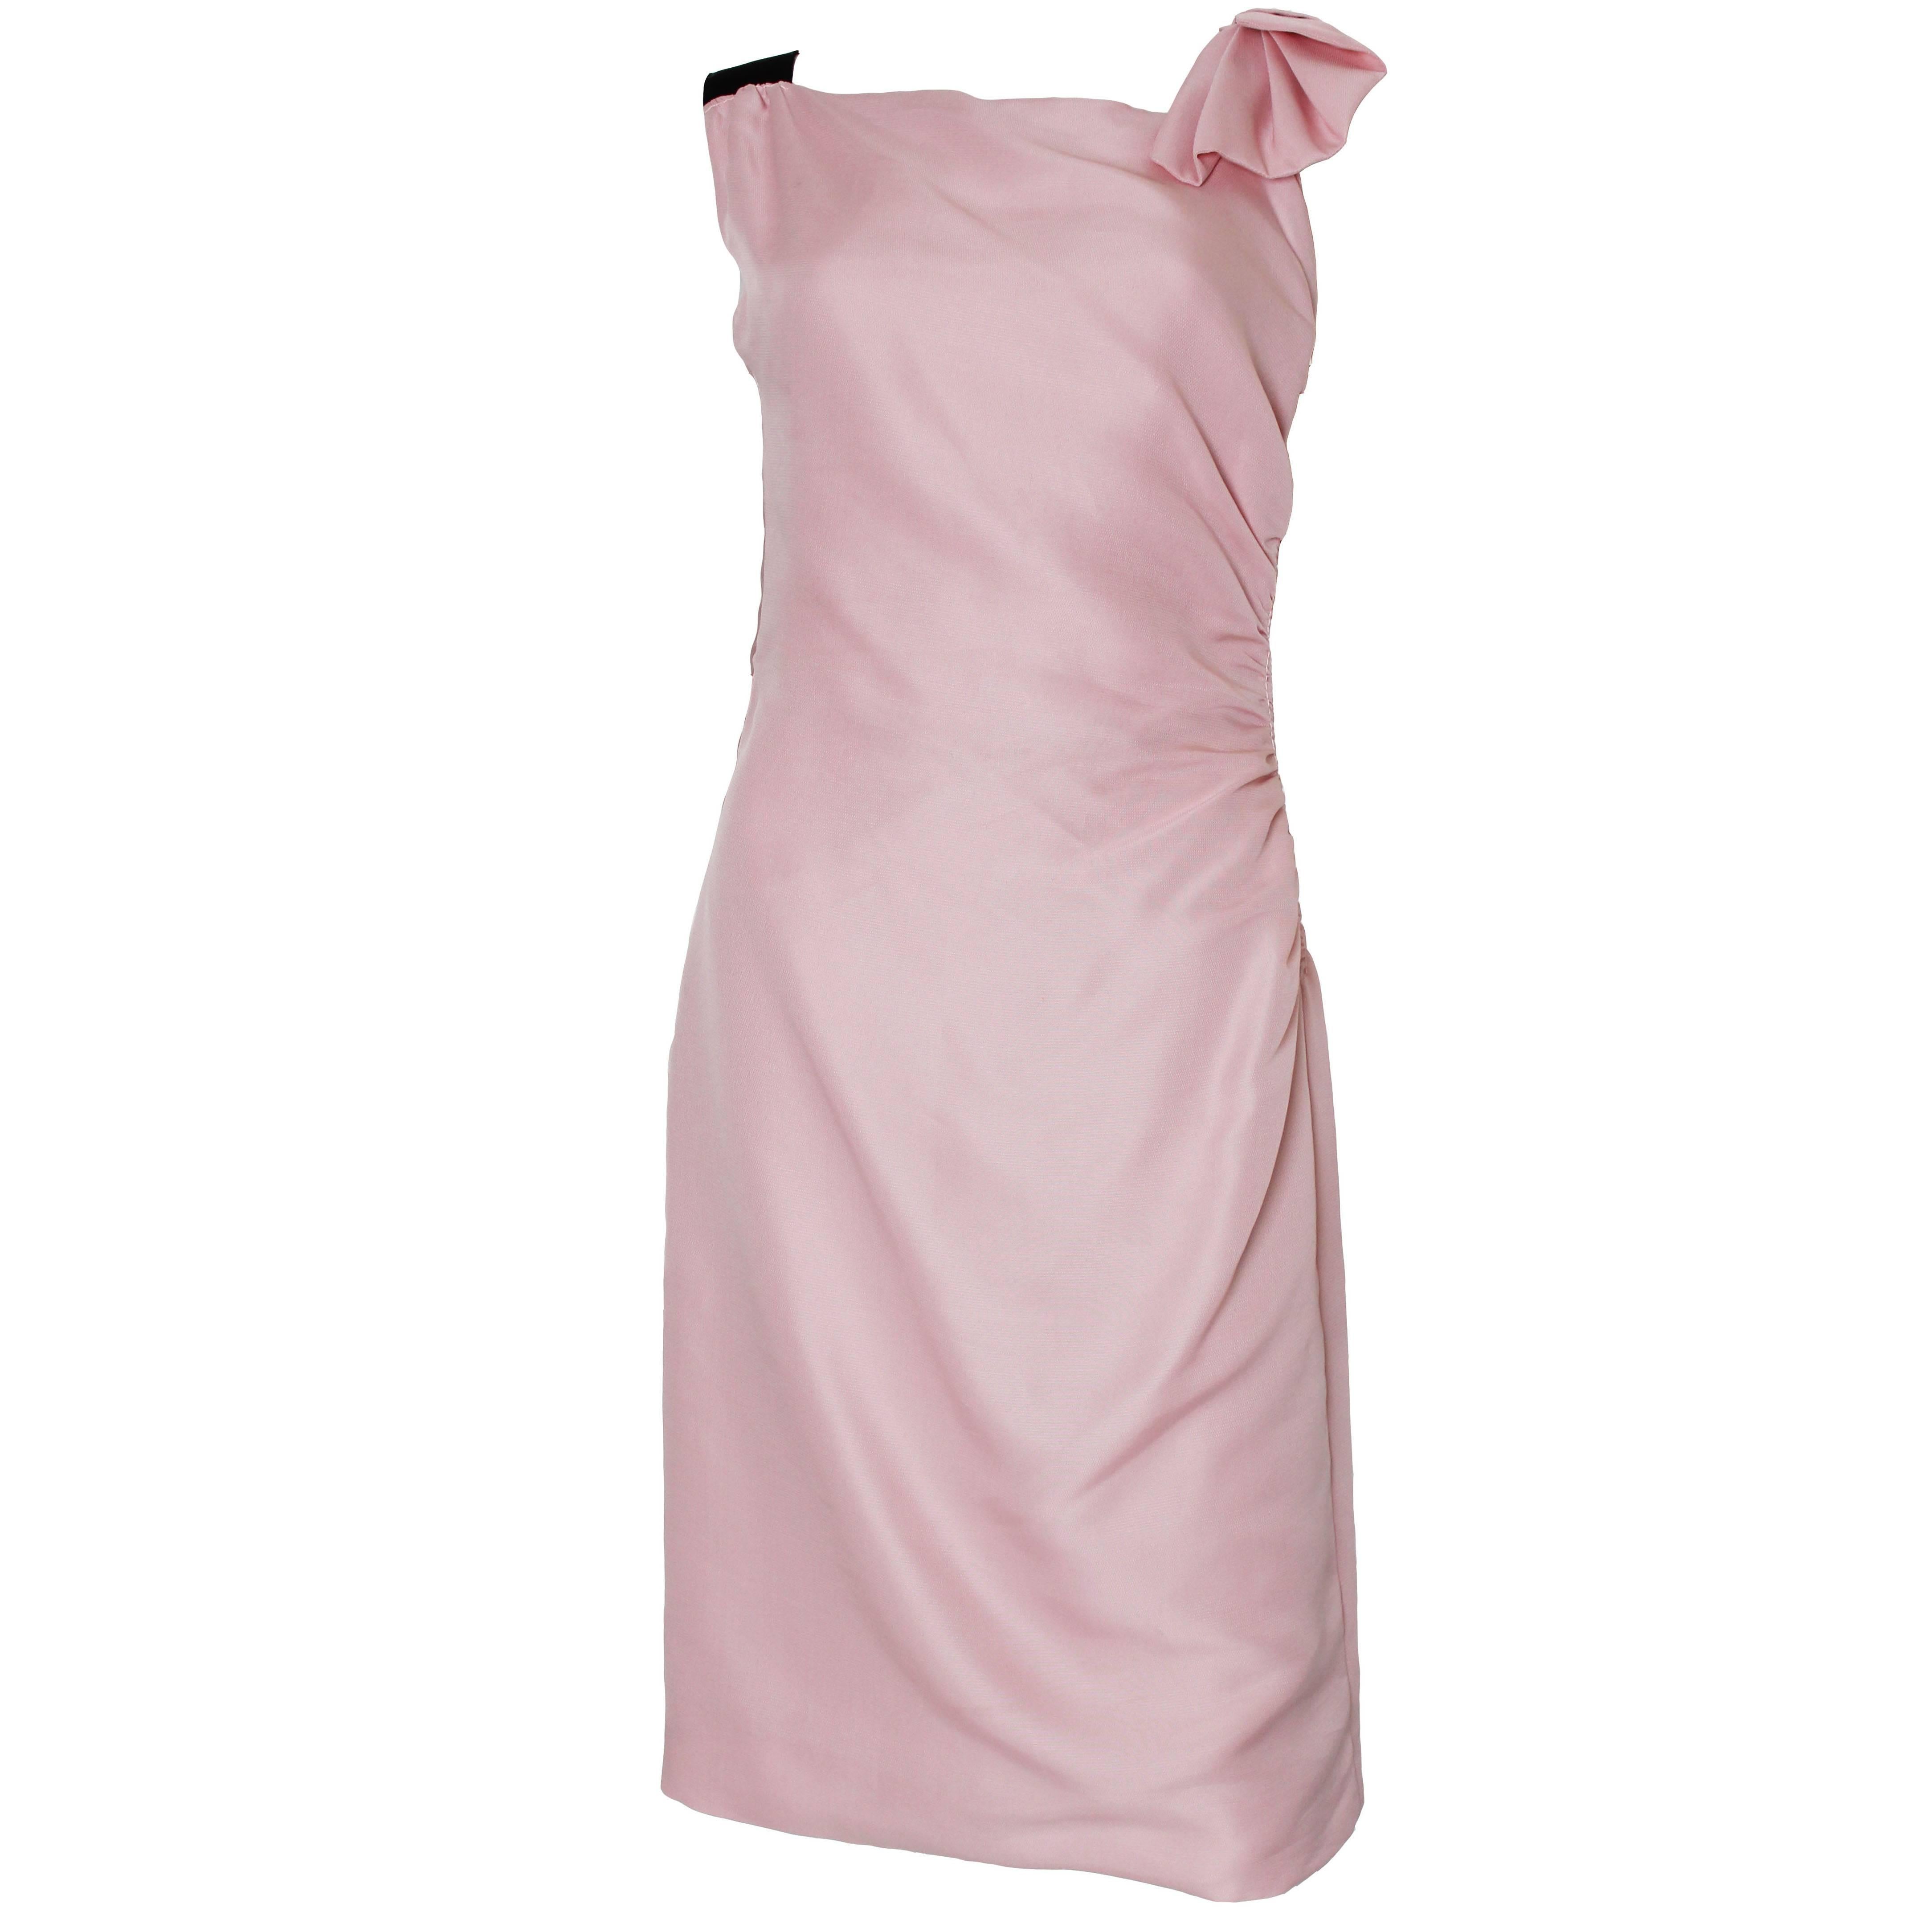 Mid 2000s Valentino Blush Pink Asymmetric Cocktail Dress